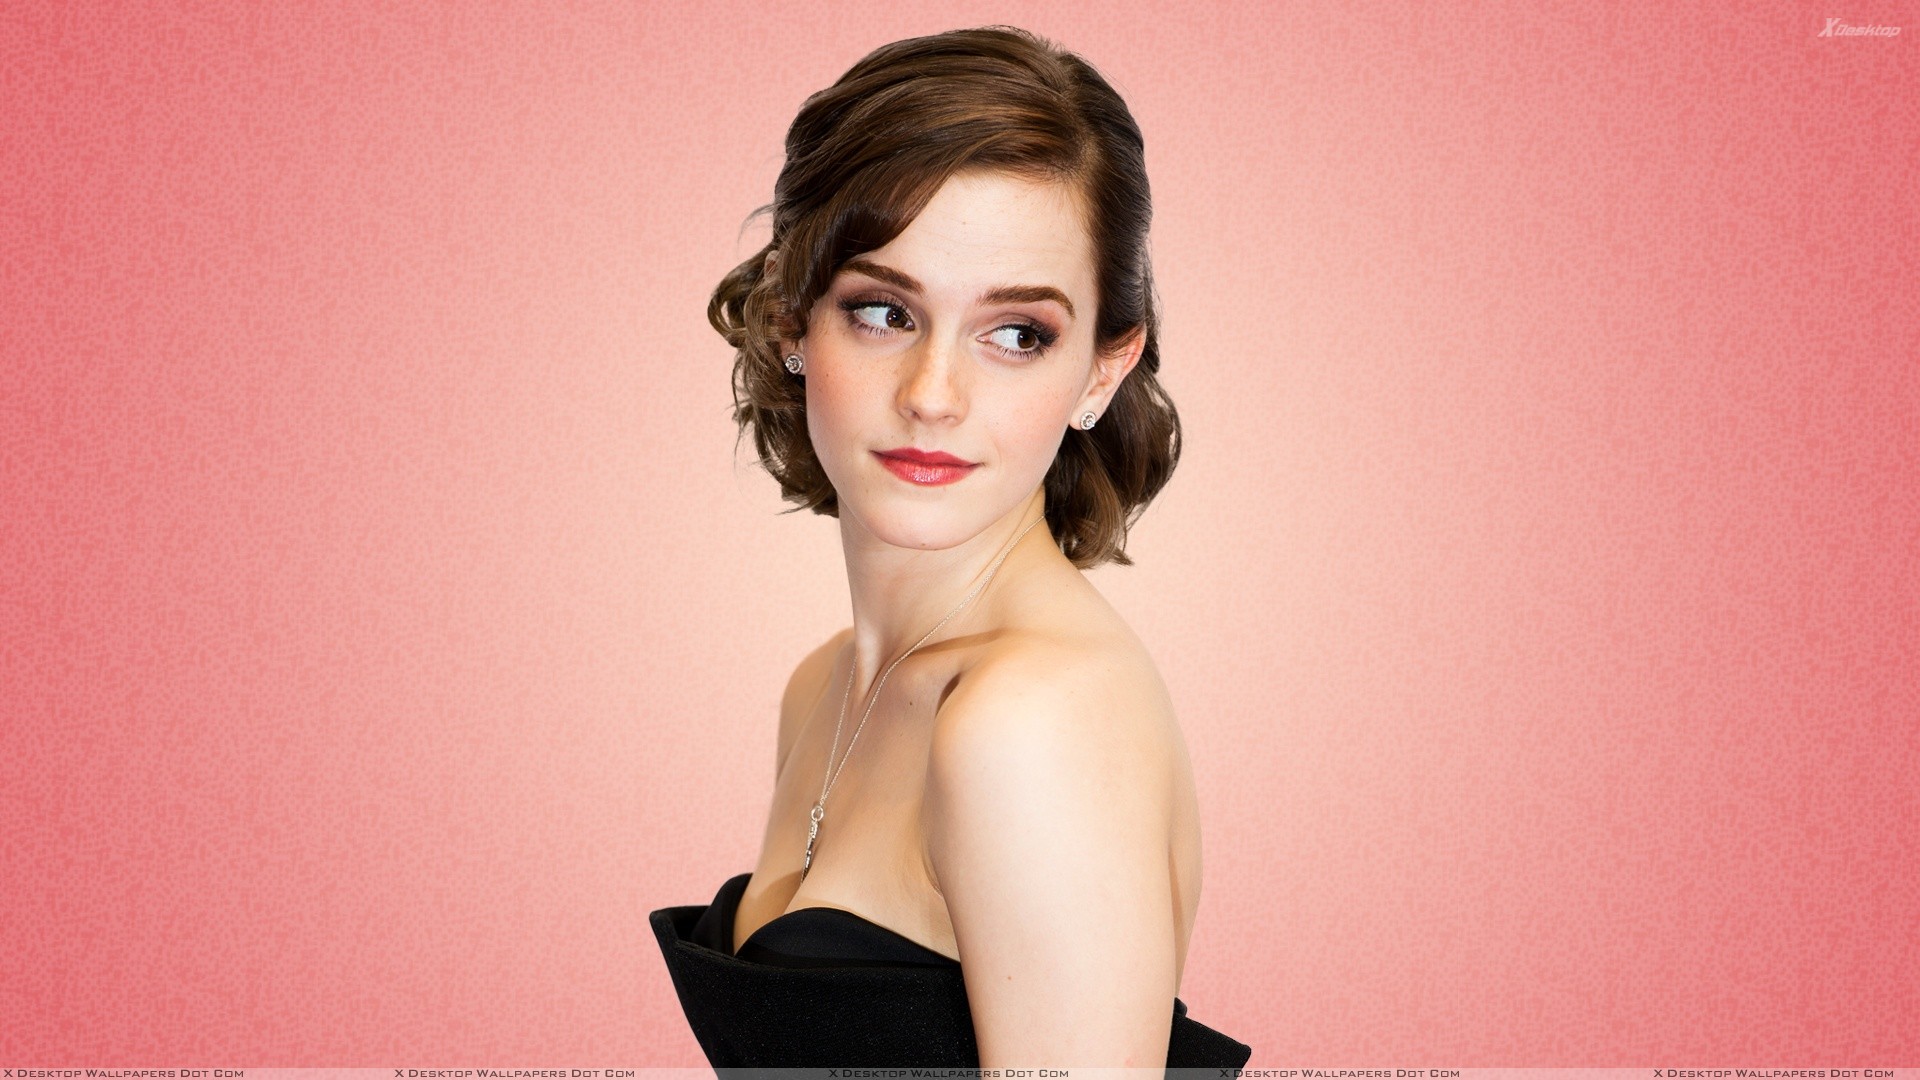 Emma Watson Wallpaper Photos Image In HD